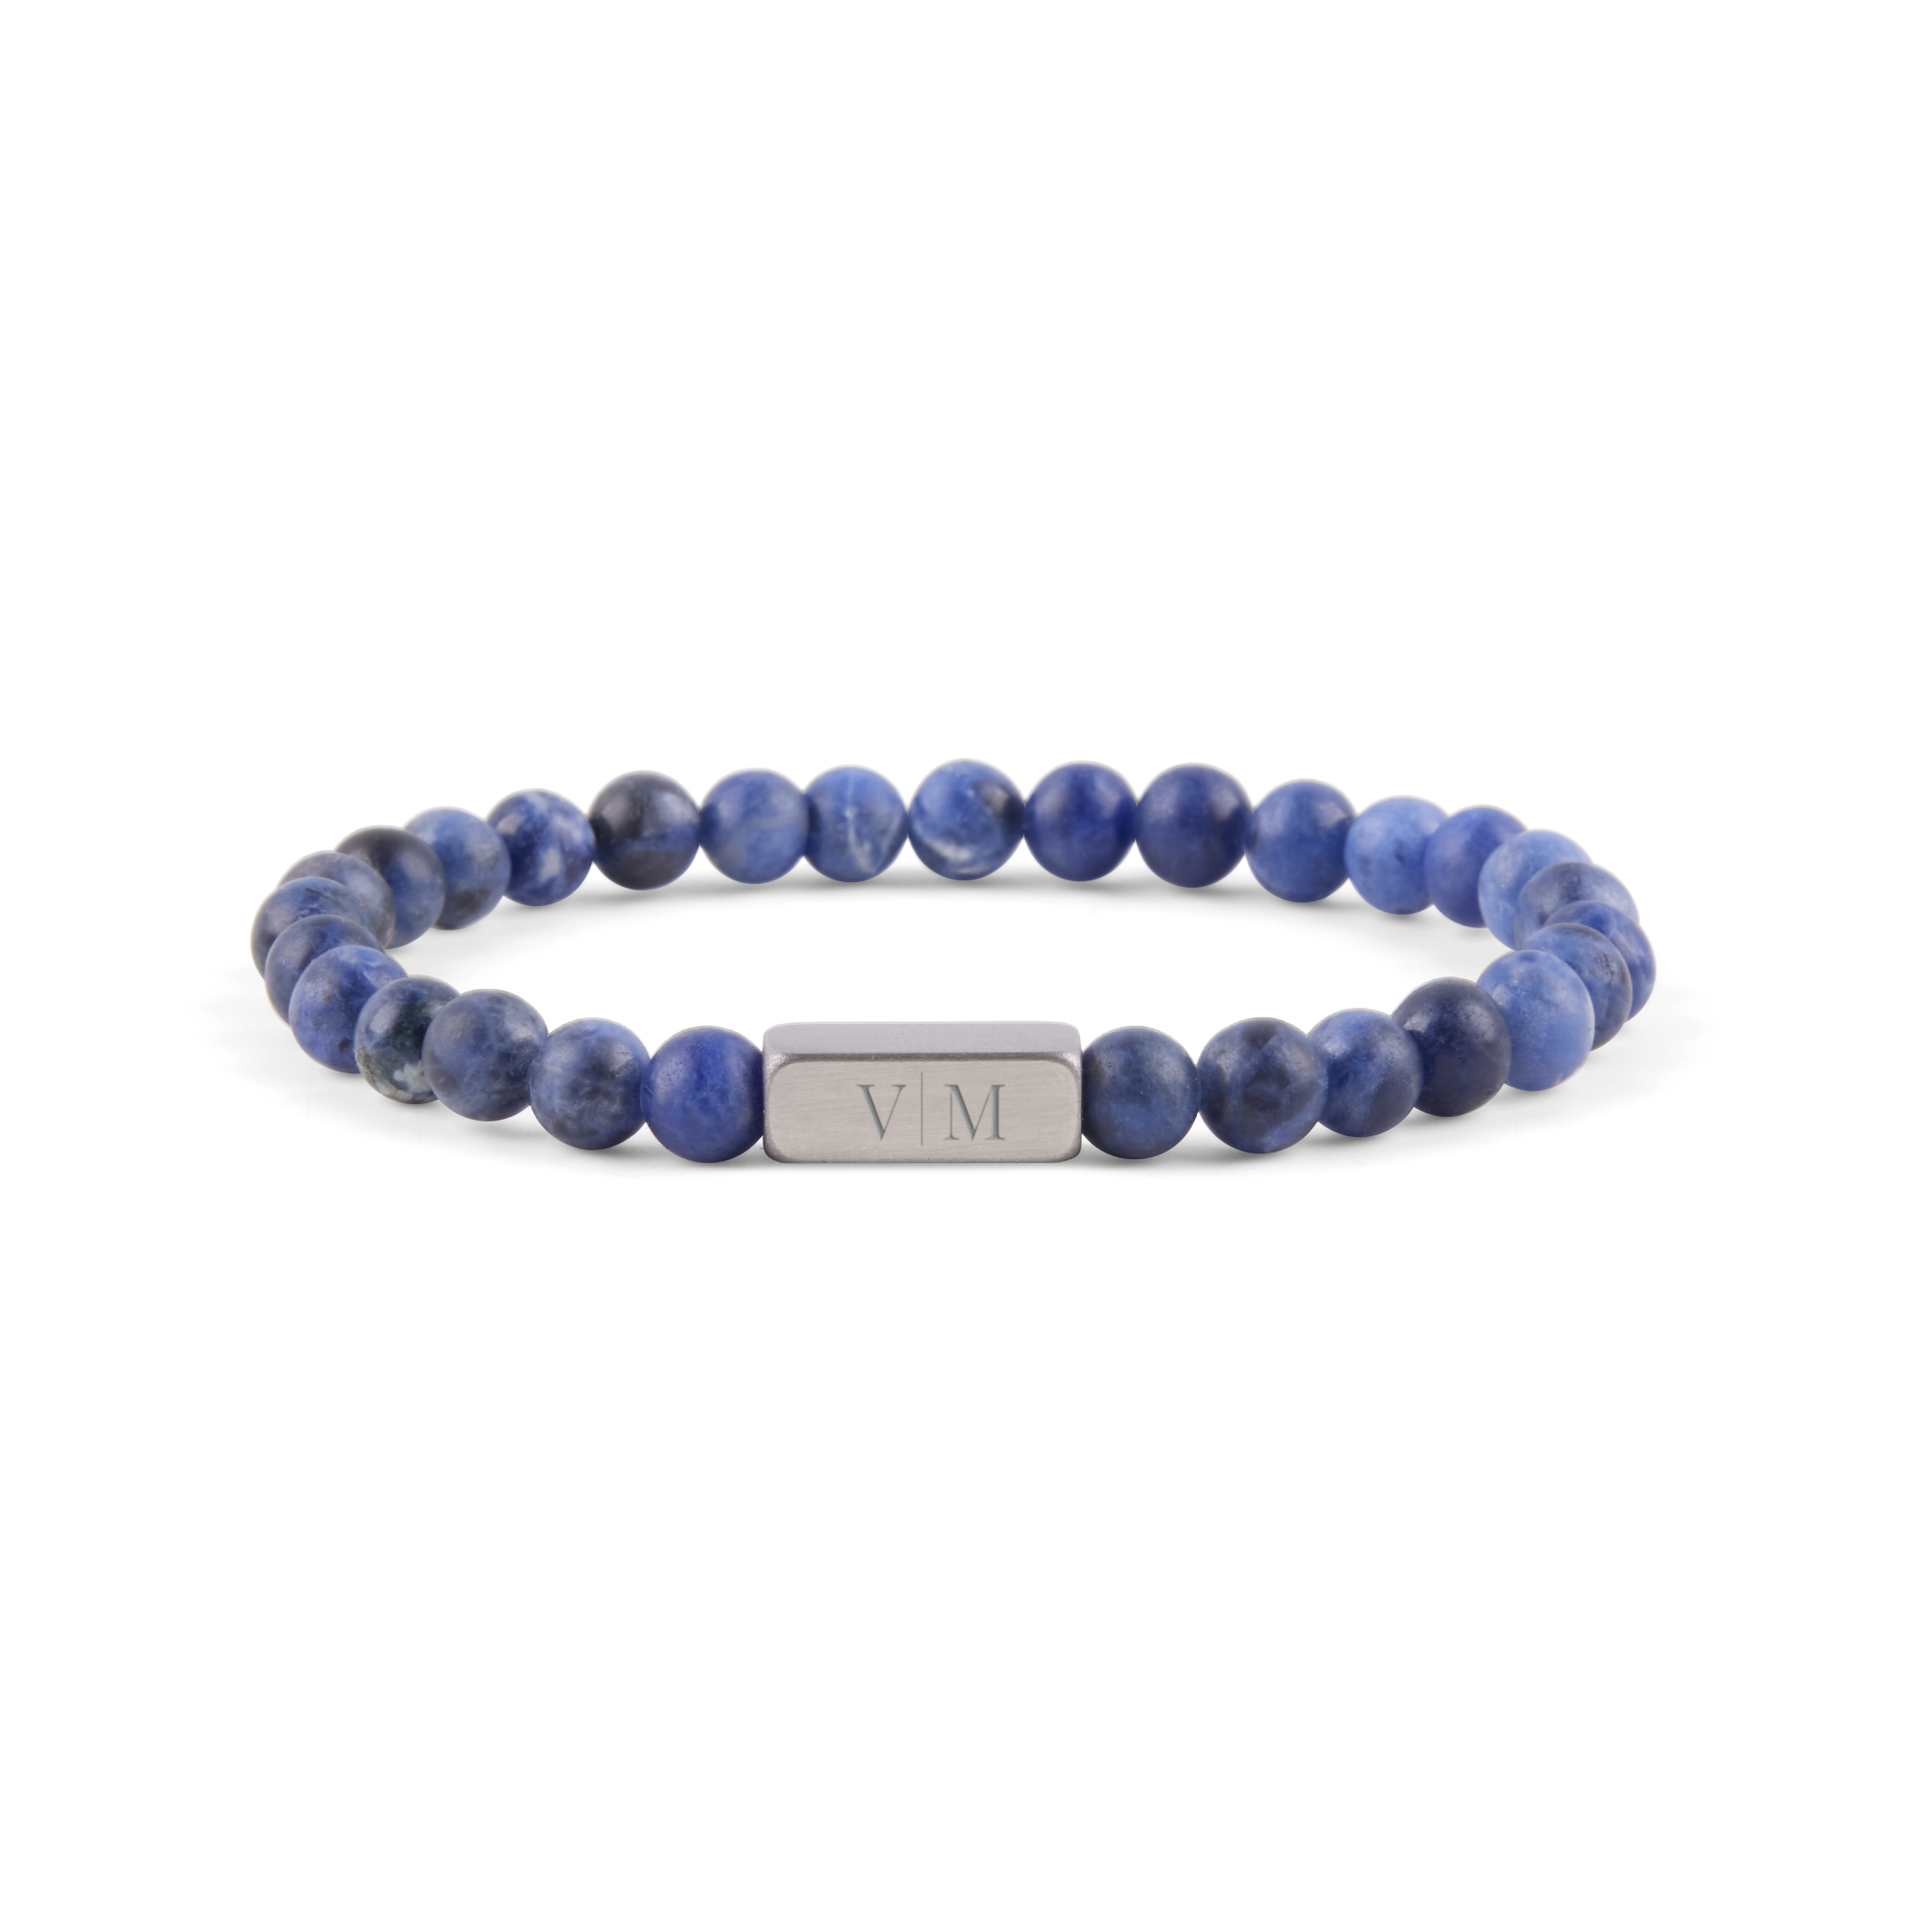 Personalised gemstone bracelet - Blue - M